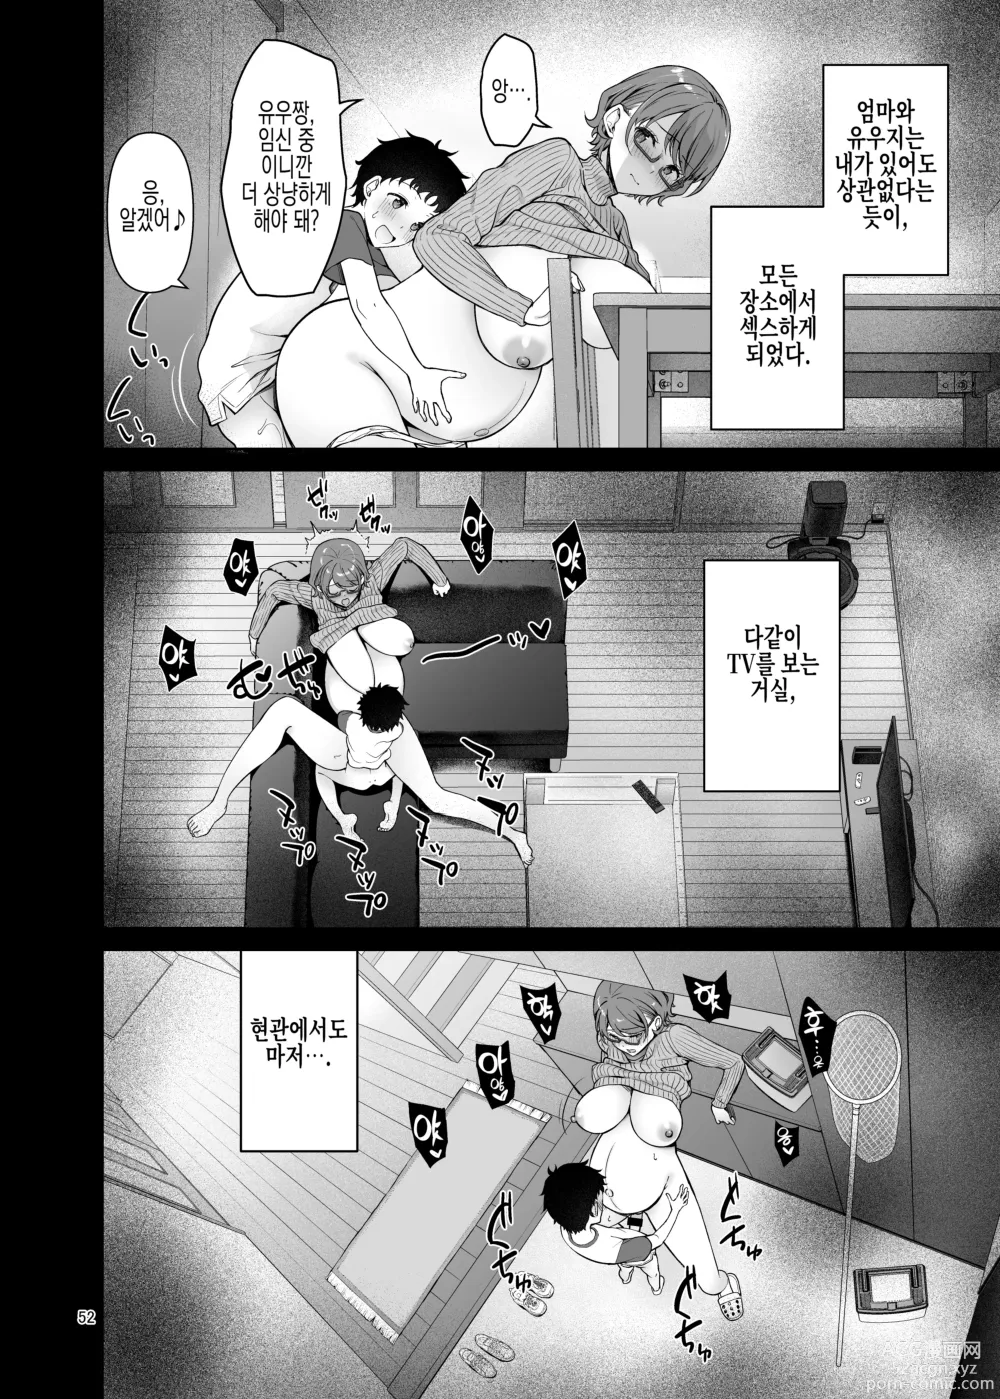 Page 53 of doujinshi 엄마는 동생 앞에서만 개변태가 된다